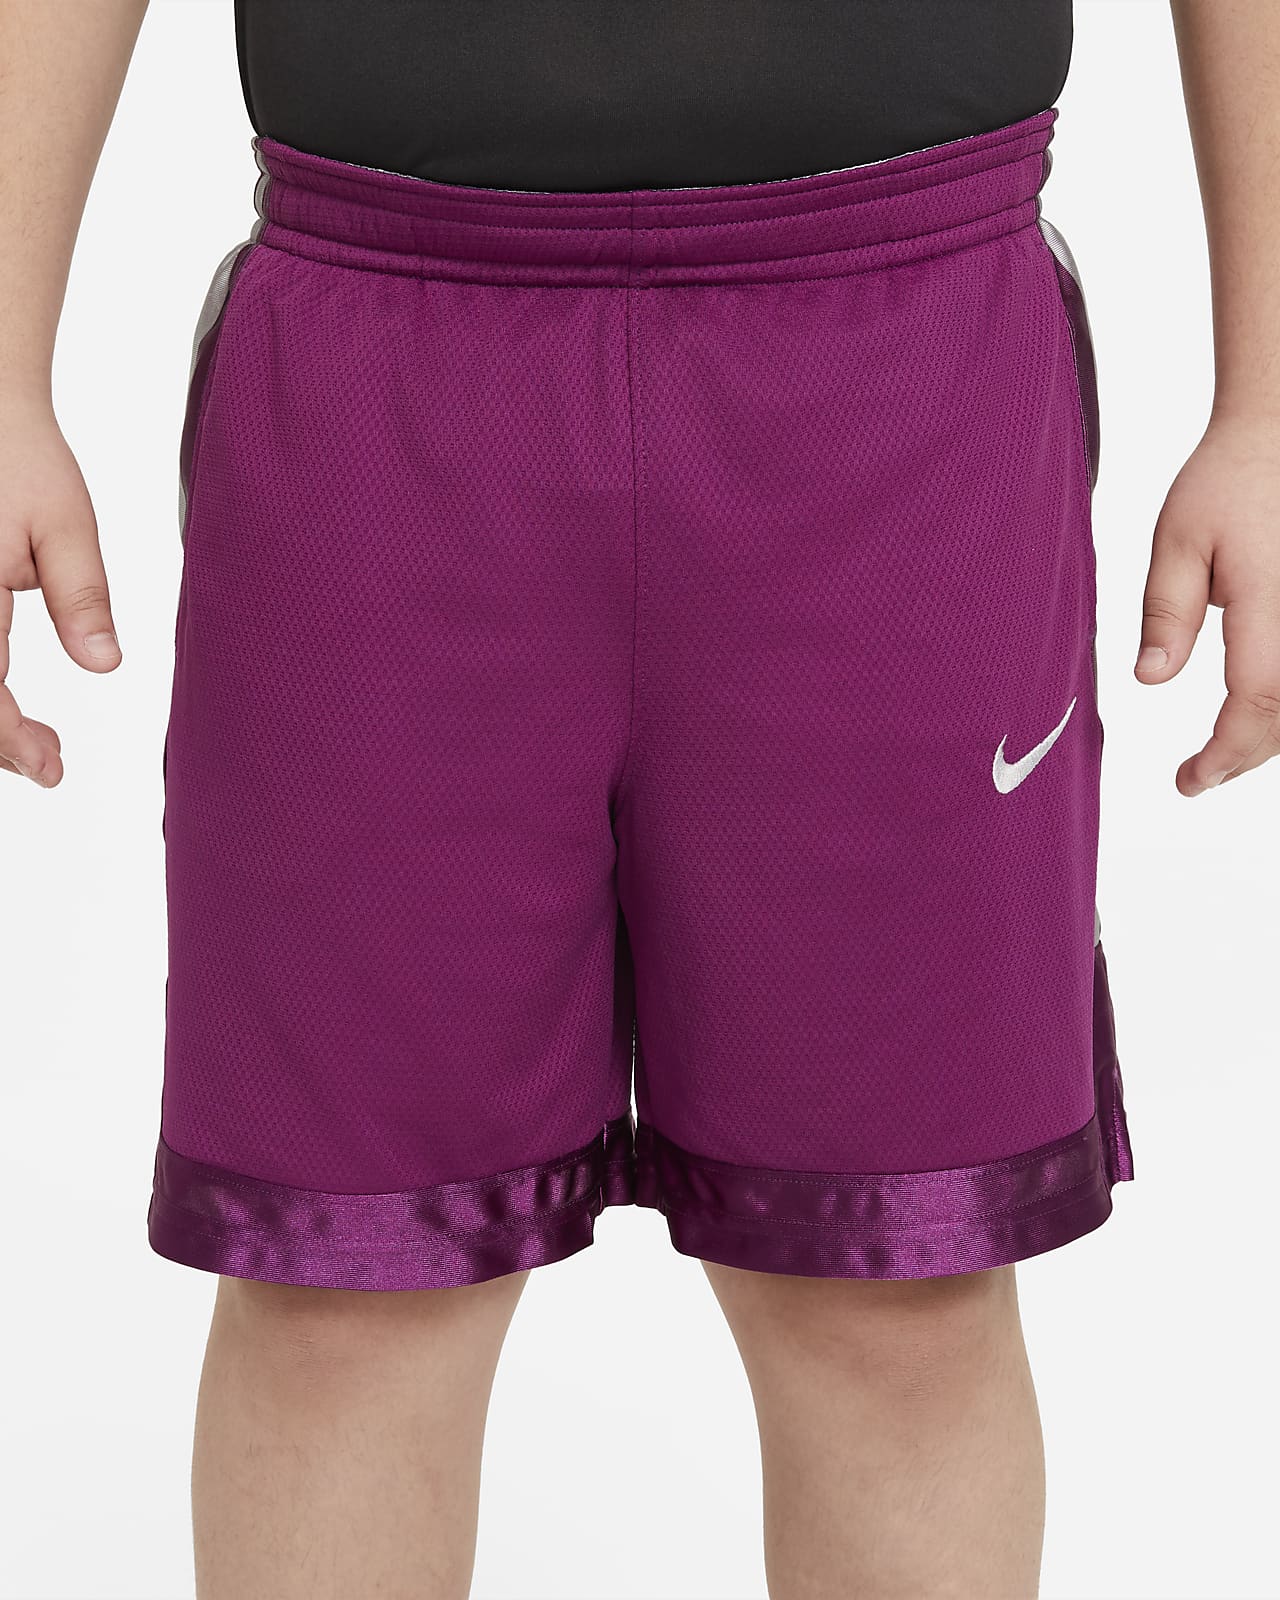 Nike Boys' Geometric-Print Elite Basketball Shorts - Big Kid